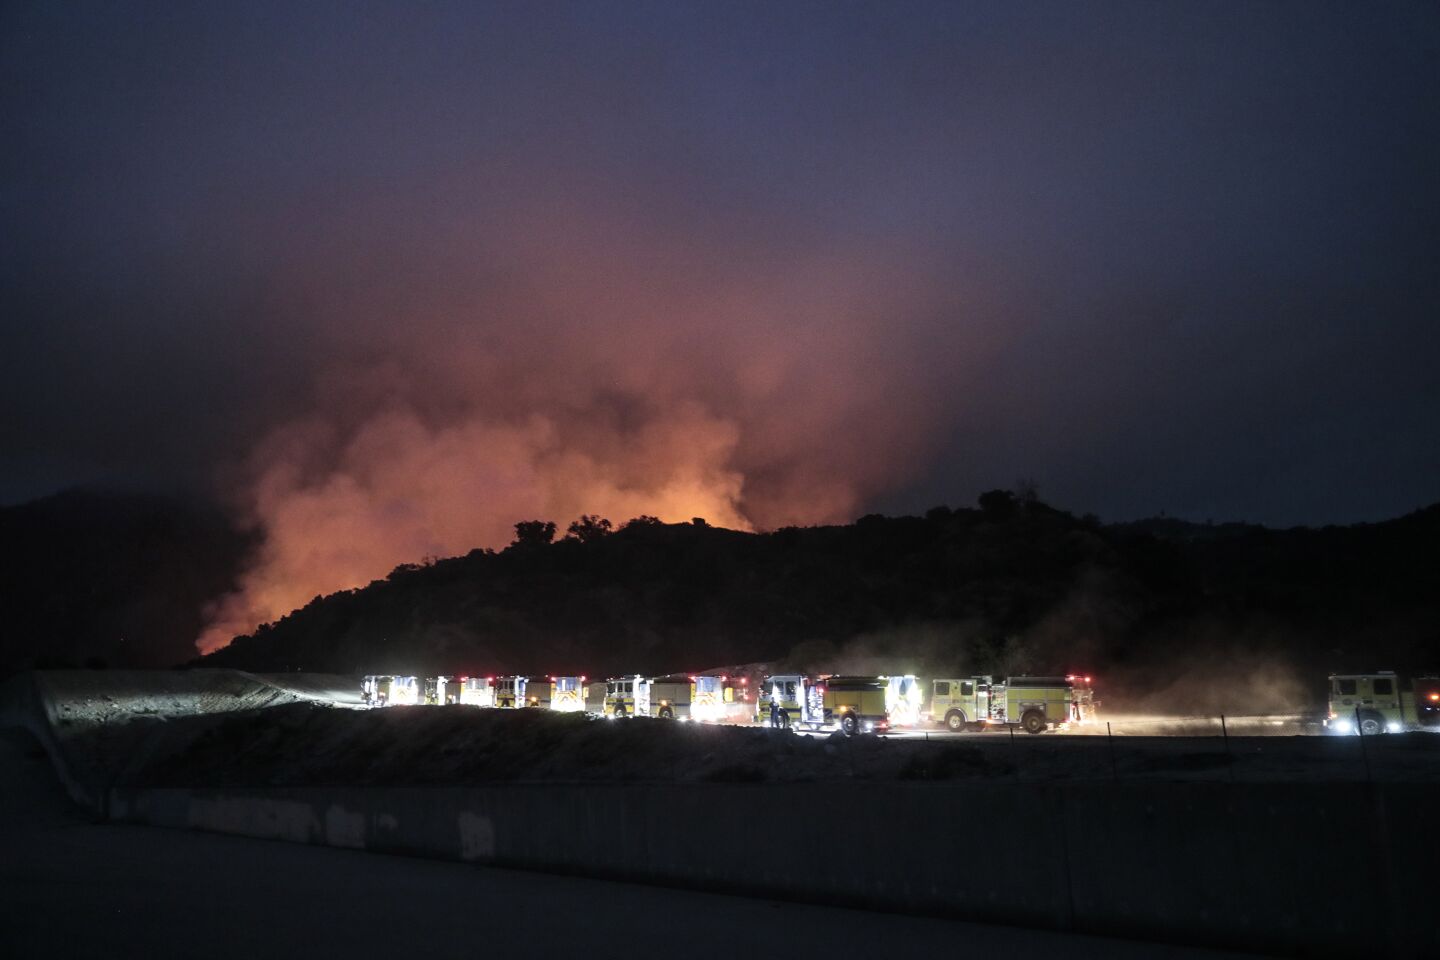 Fire engines head to the flaming Santa Anita Canyon as the Bobcat fire burns near Arcadia